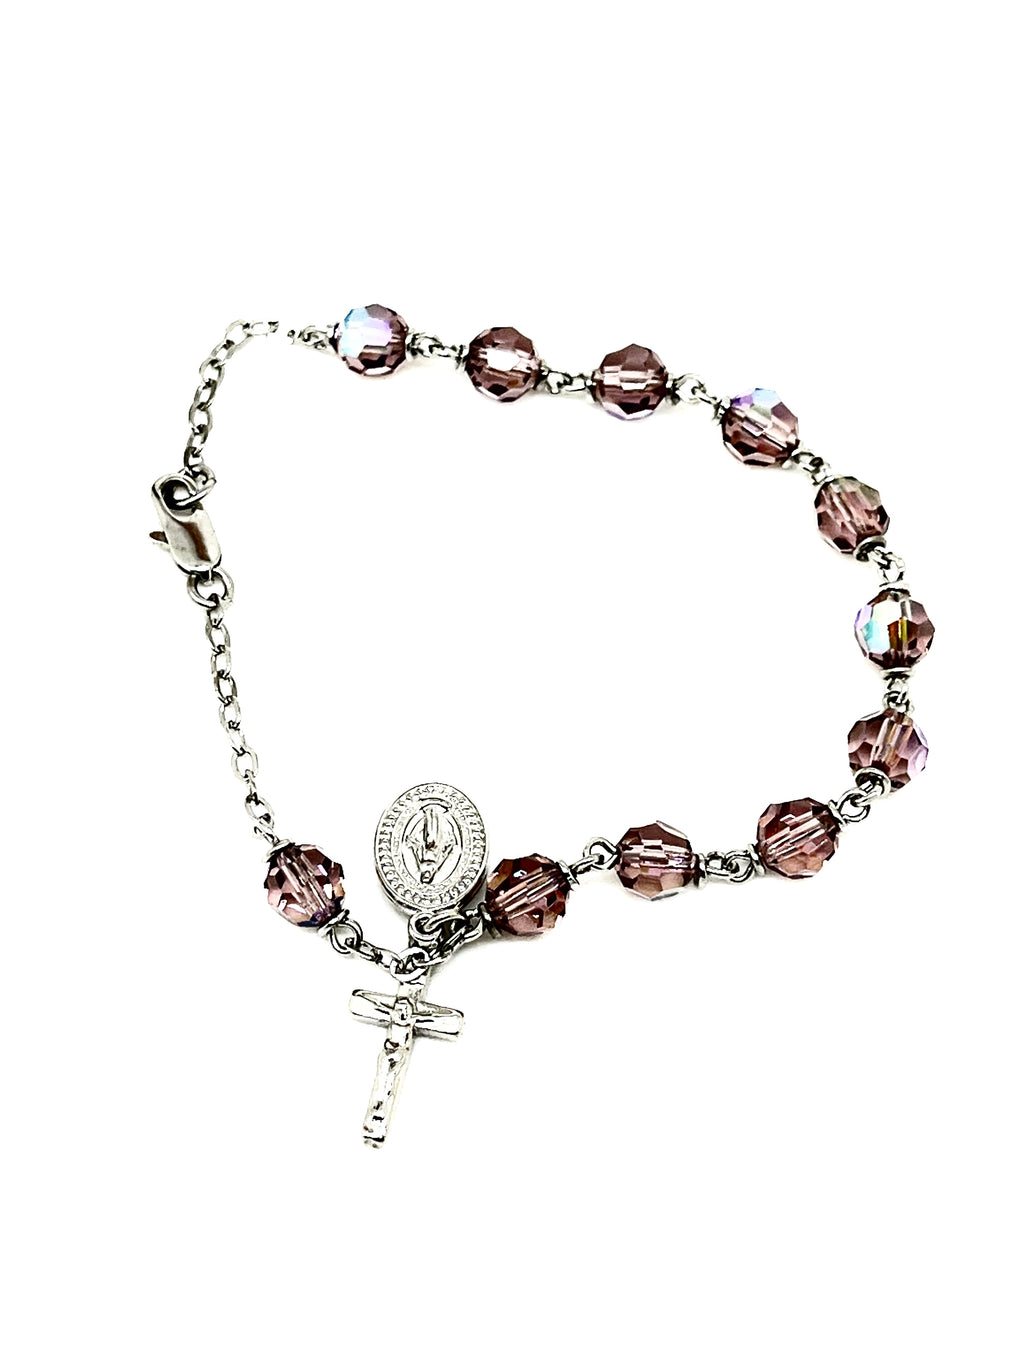 Light Amethyst Crystal Rosary Bracelet 6MM - Unique Catholic Gifts